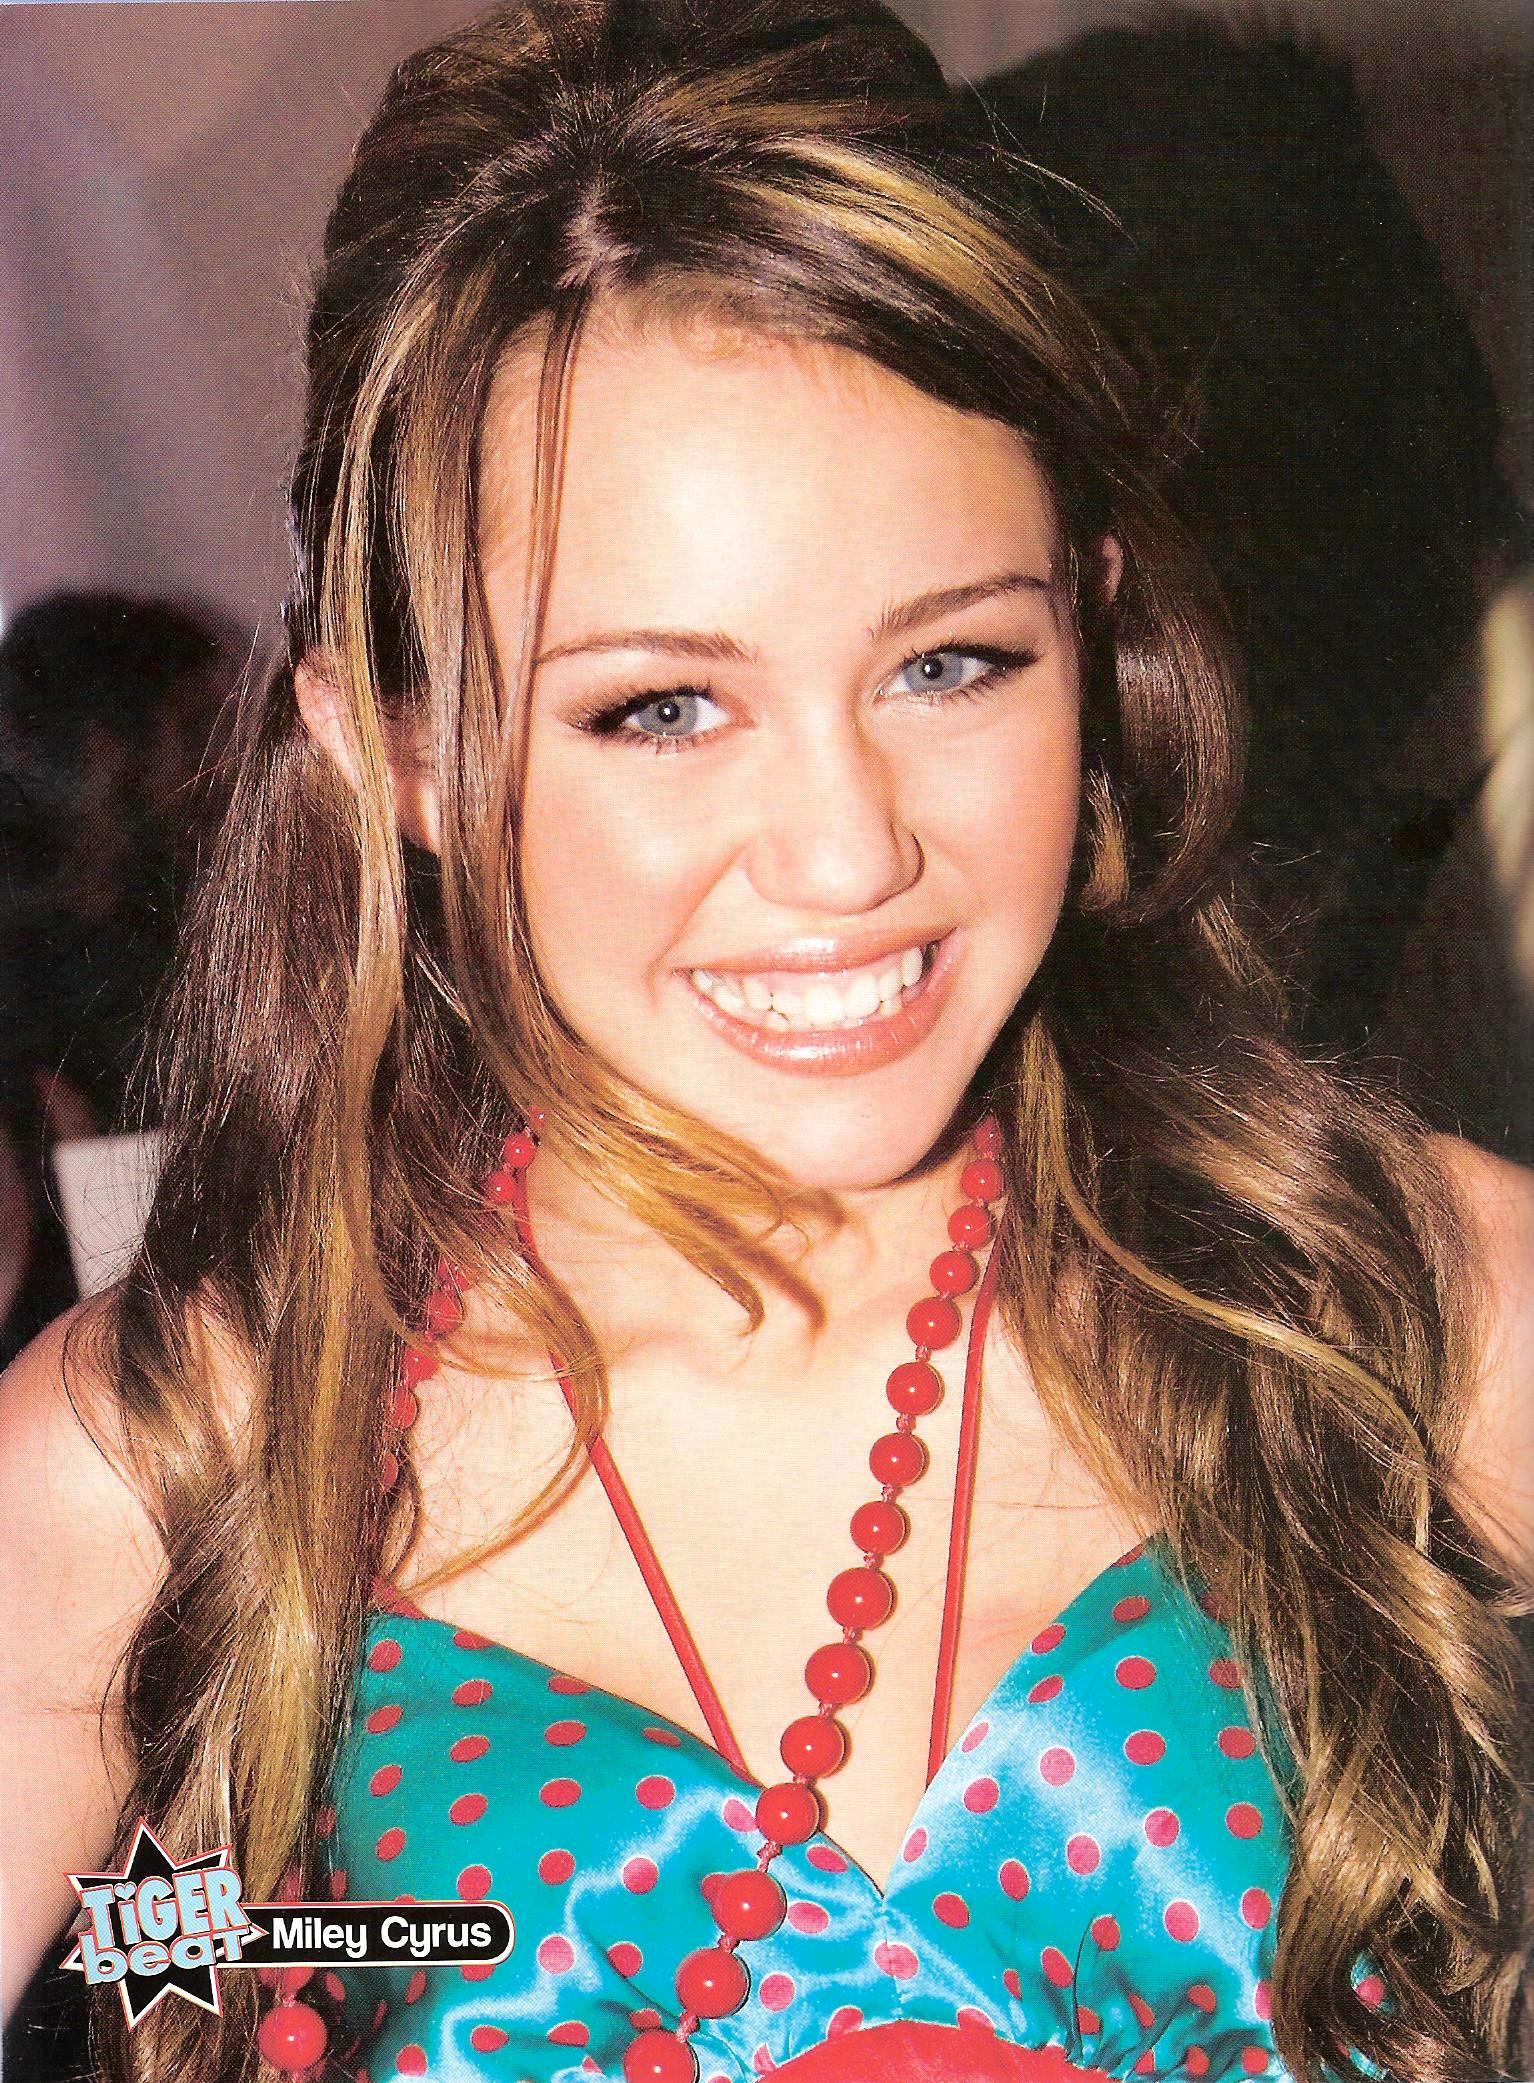 Miley Cyrus in Teen Choice Awards 2006